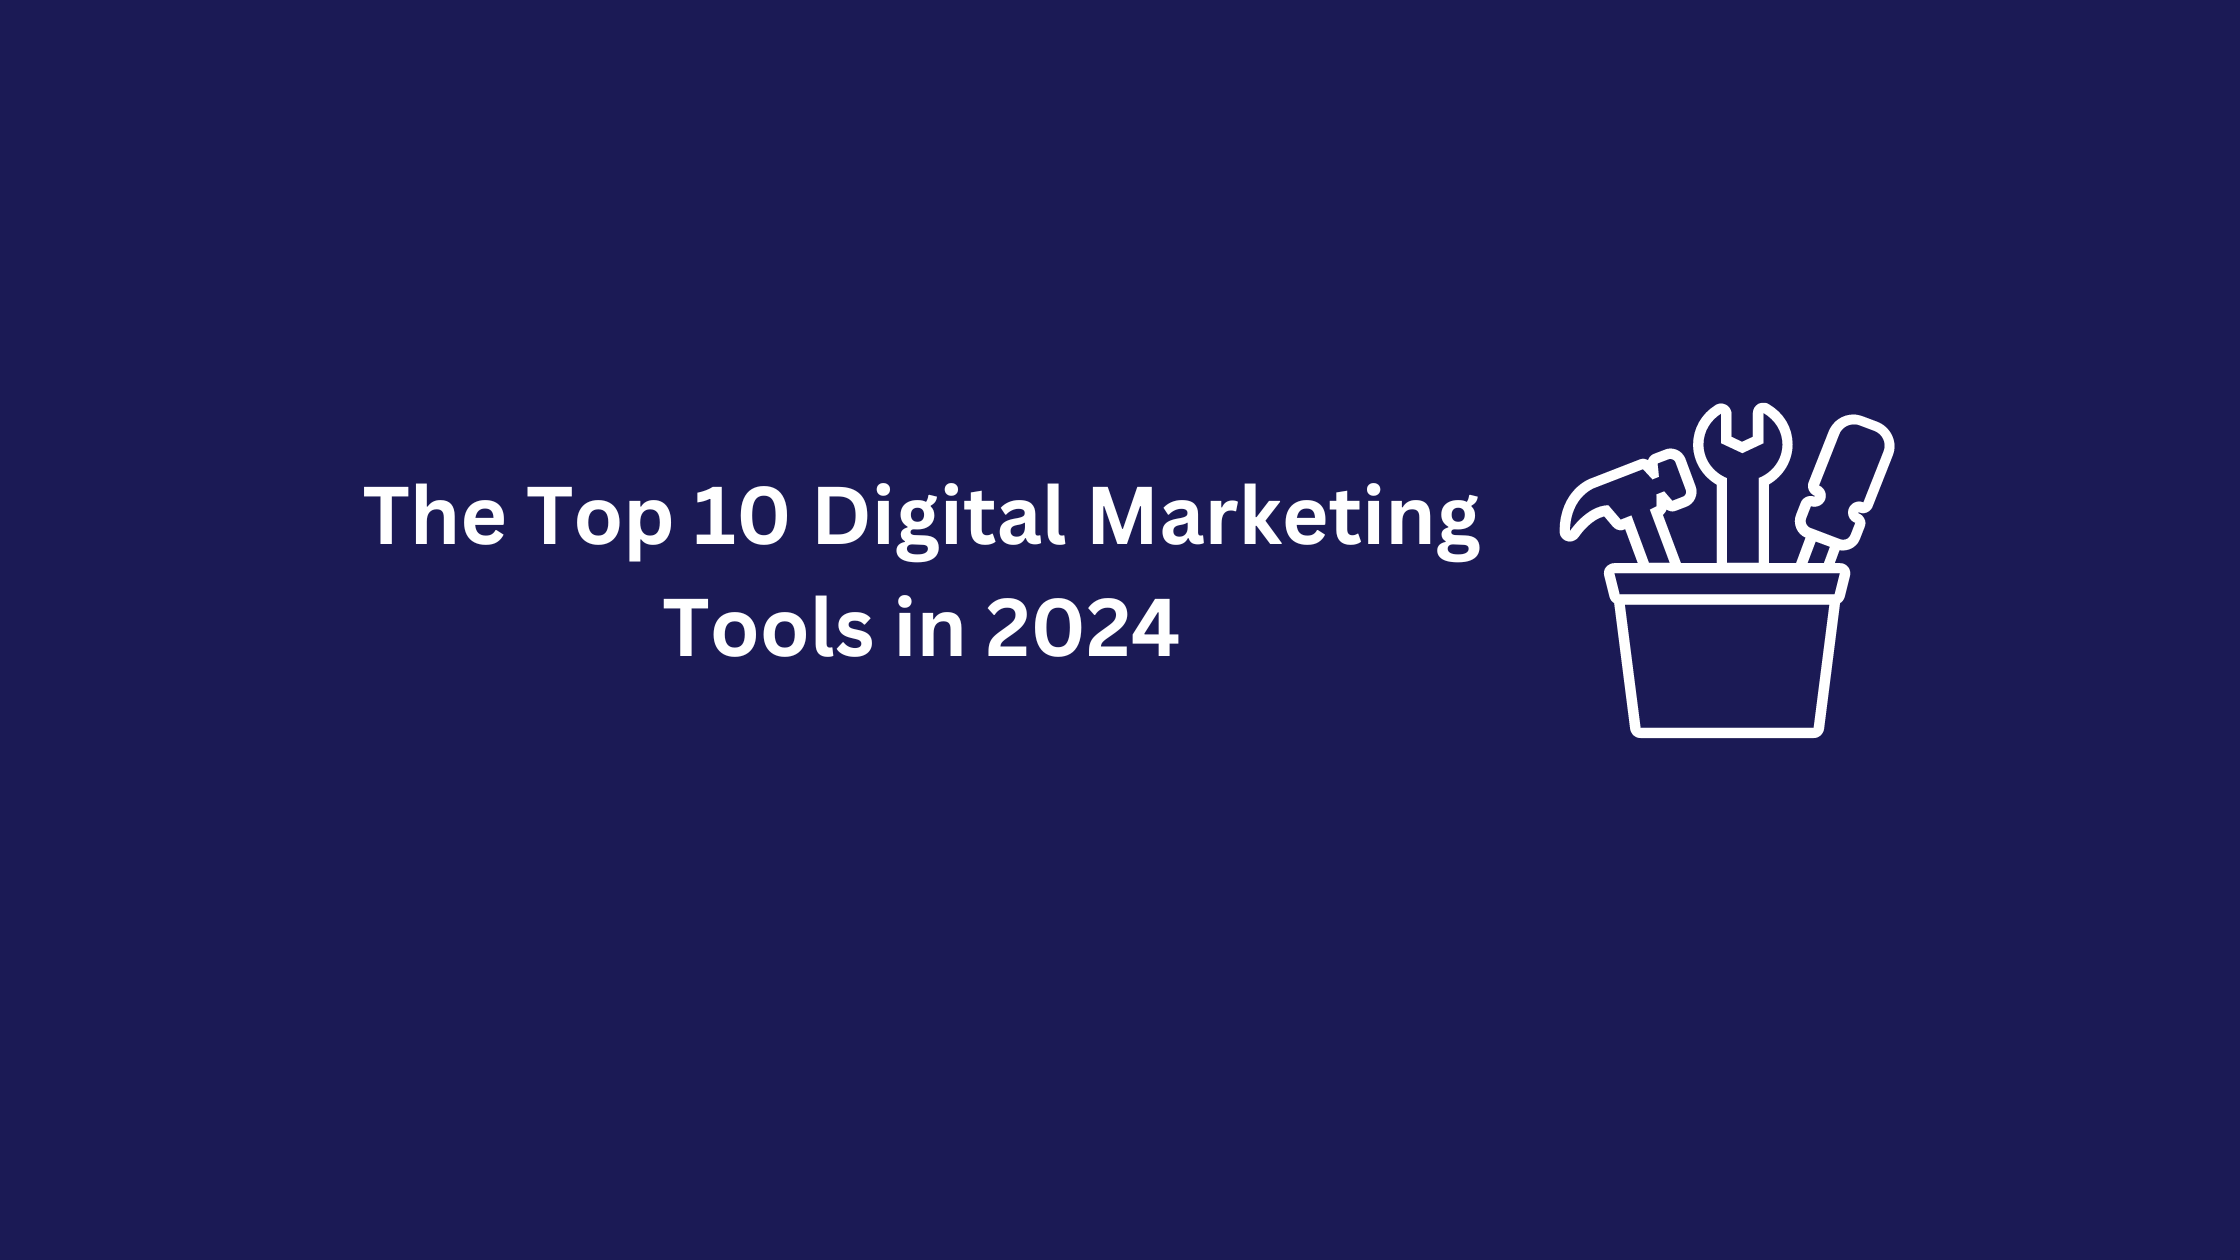 The Top 10 Digital Marketing Tools Certified in 2024